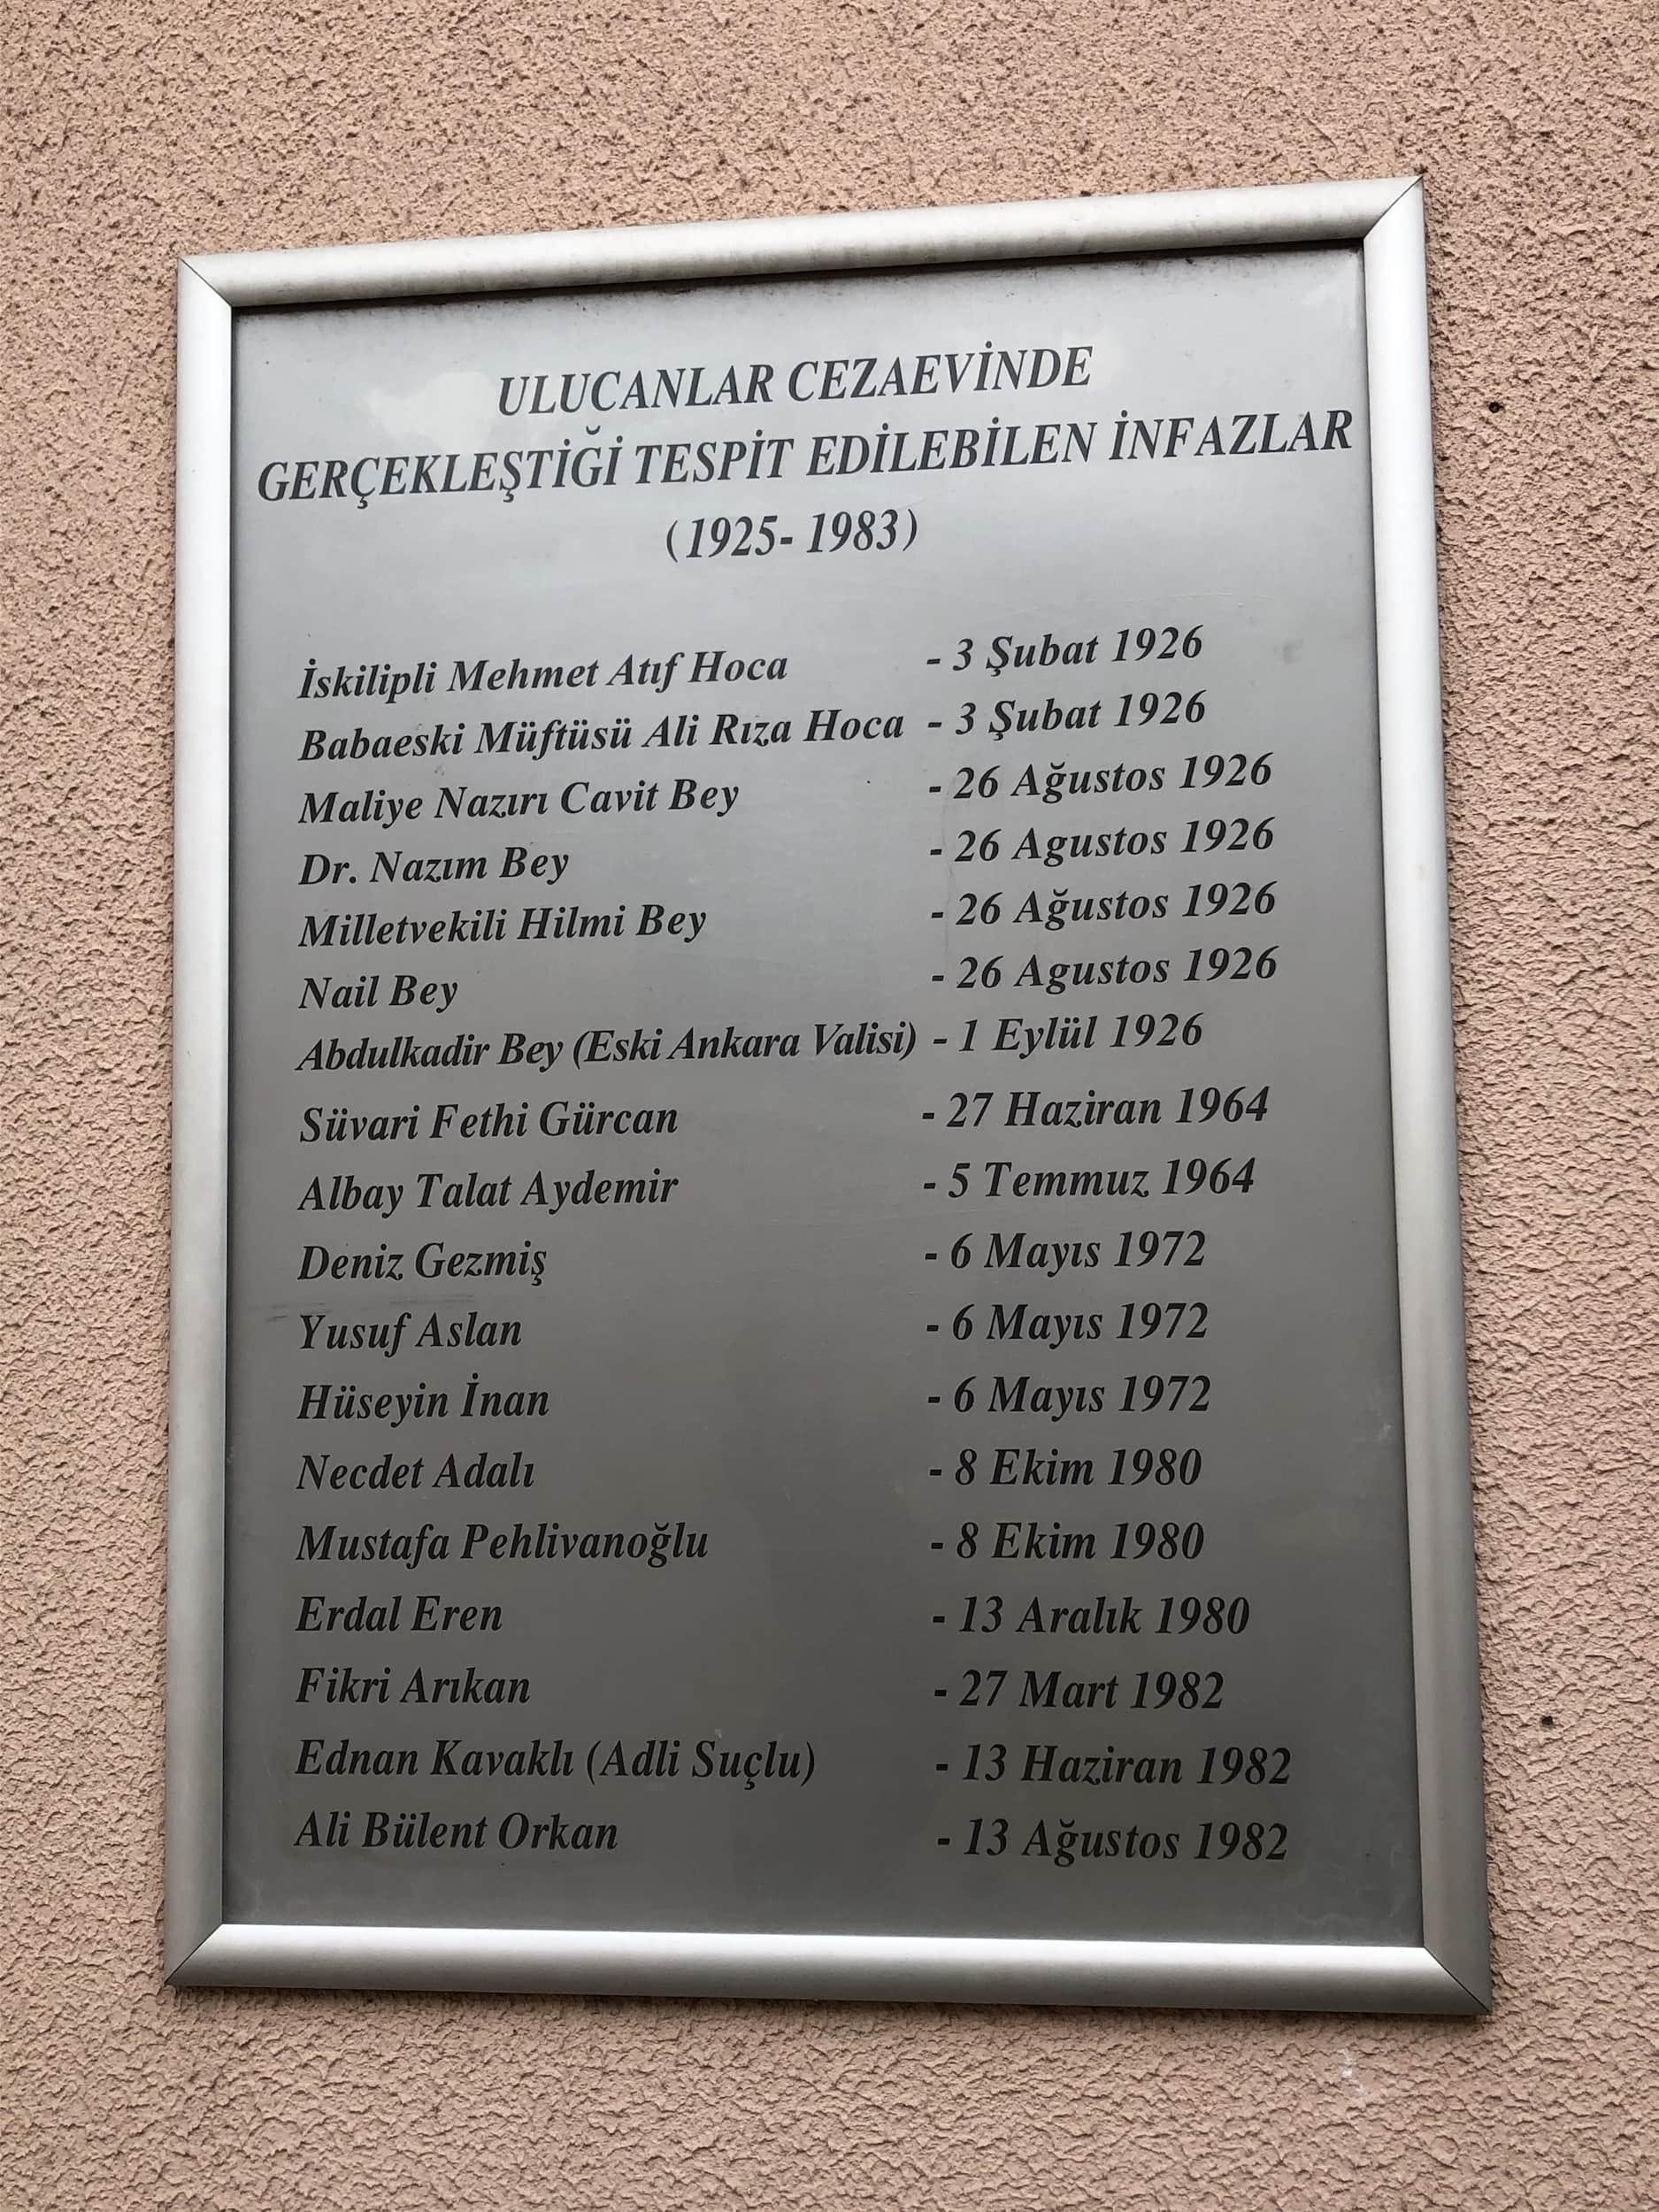 List of executions at Ulucanlar Prison in Ankara, Turkey